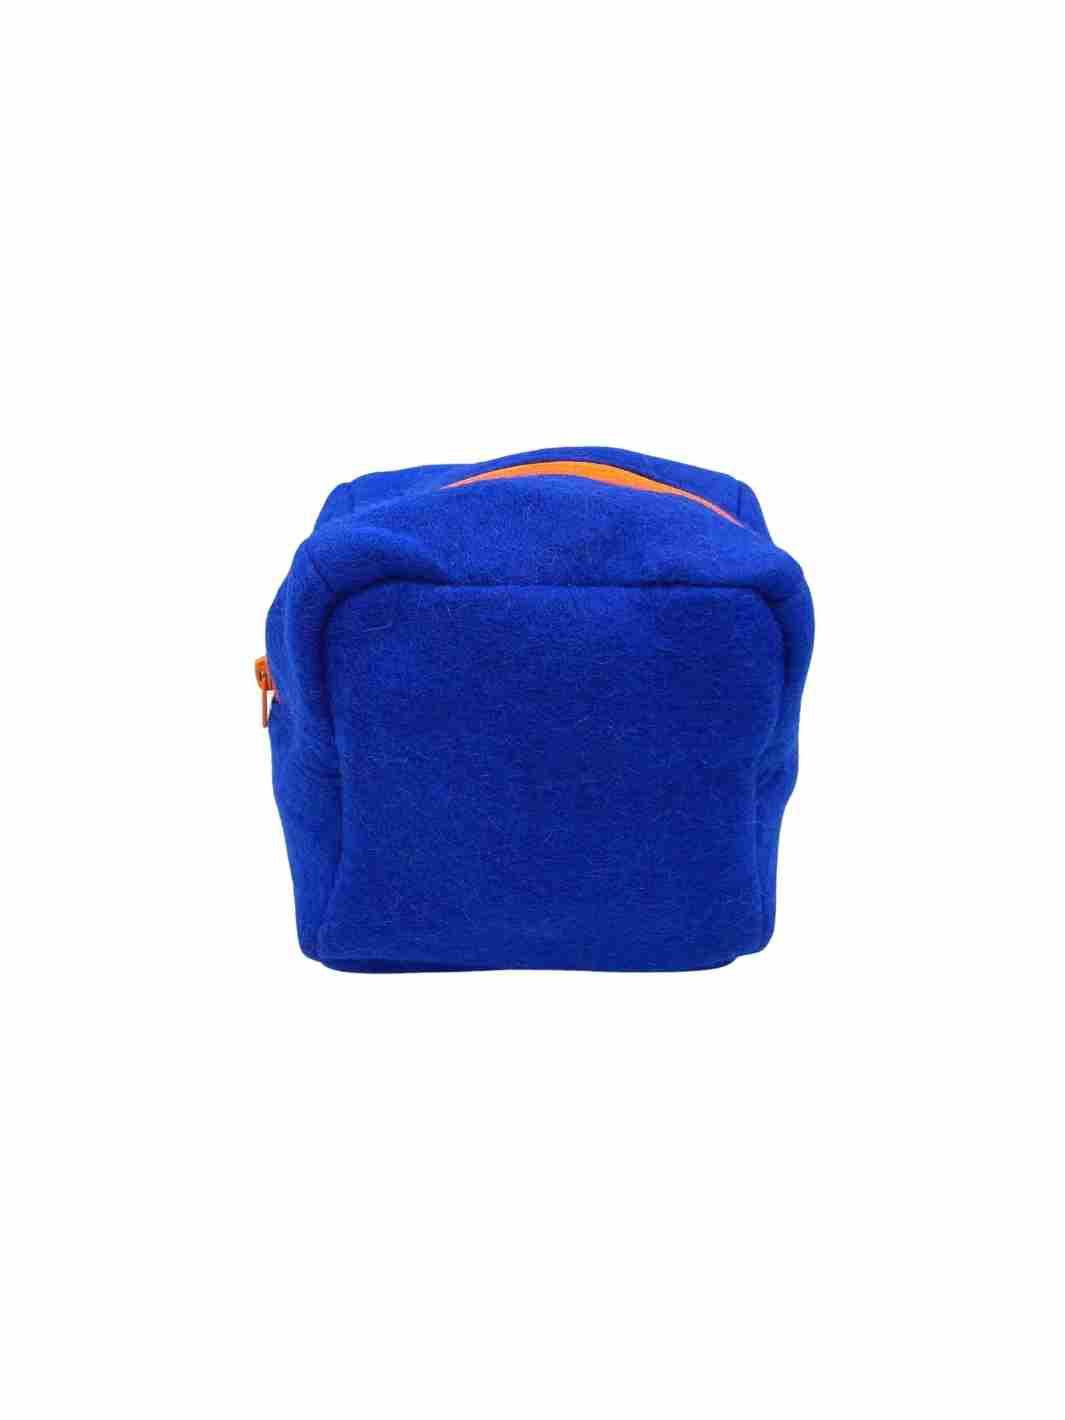 Eco Storage | Felt Cube Zipper Pouch (Blue and Orange) | Felt Cube Pouch | Felt Pouch | Eco Dog & Cat